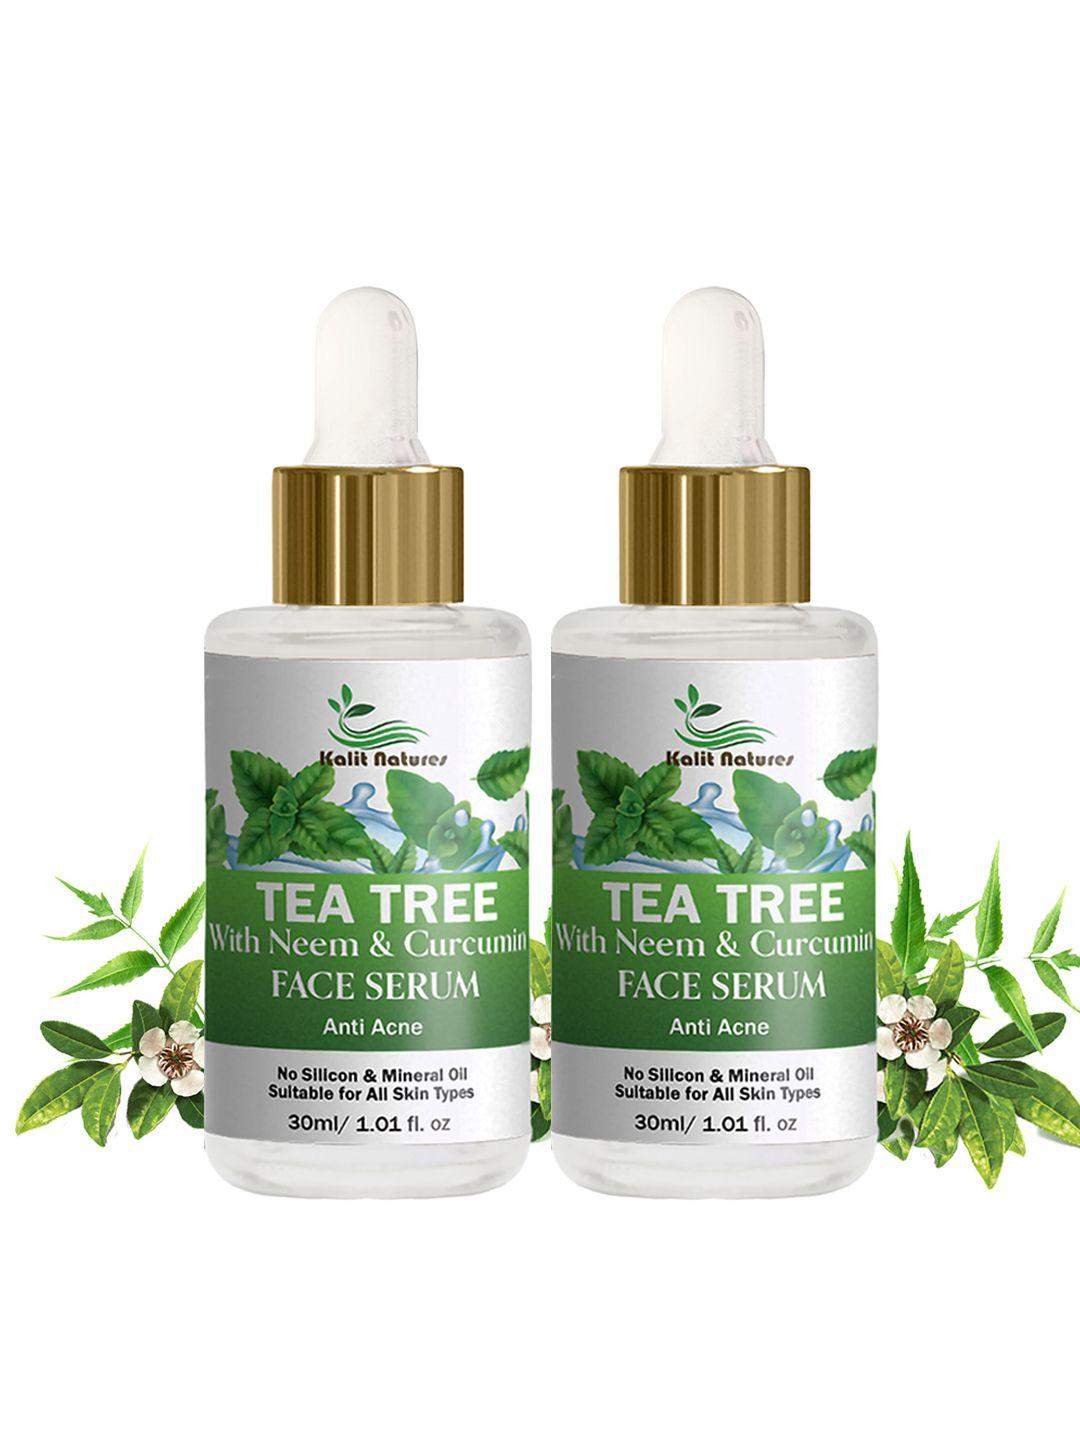 kalit natures set of 2 tea tree face serum with neem & curcumin - 30 ml each